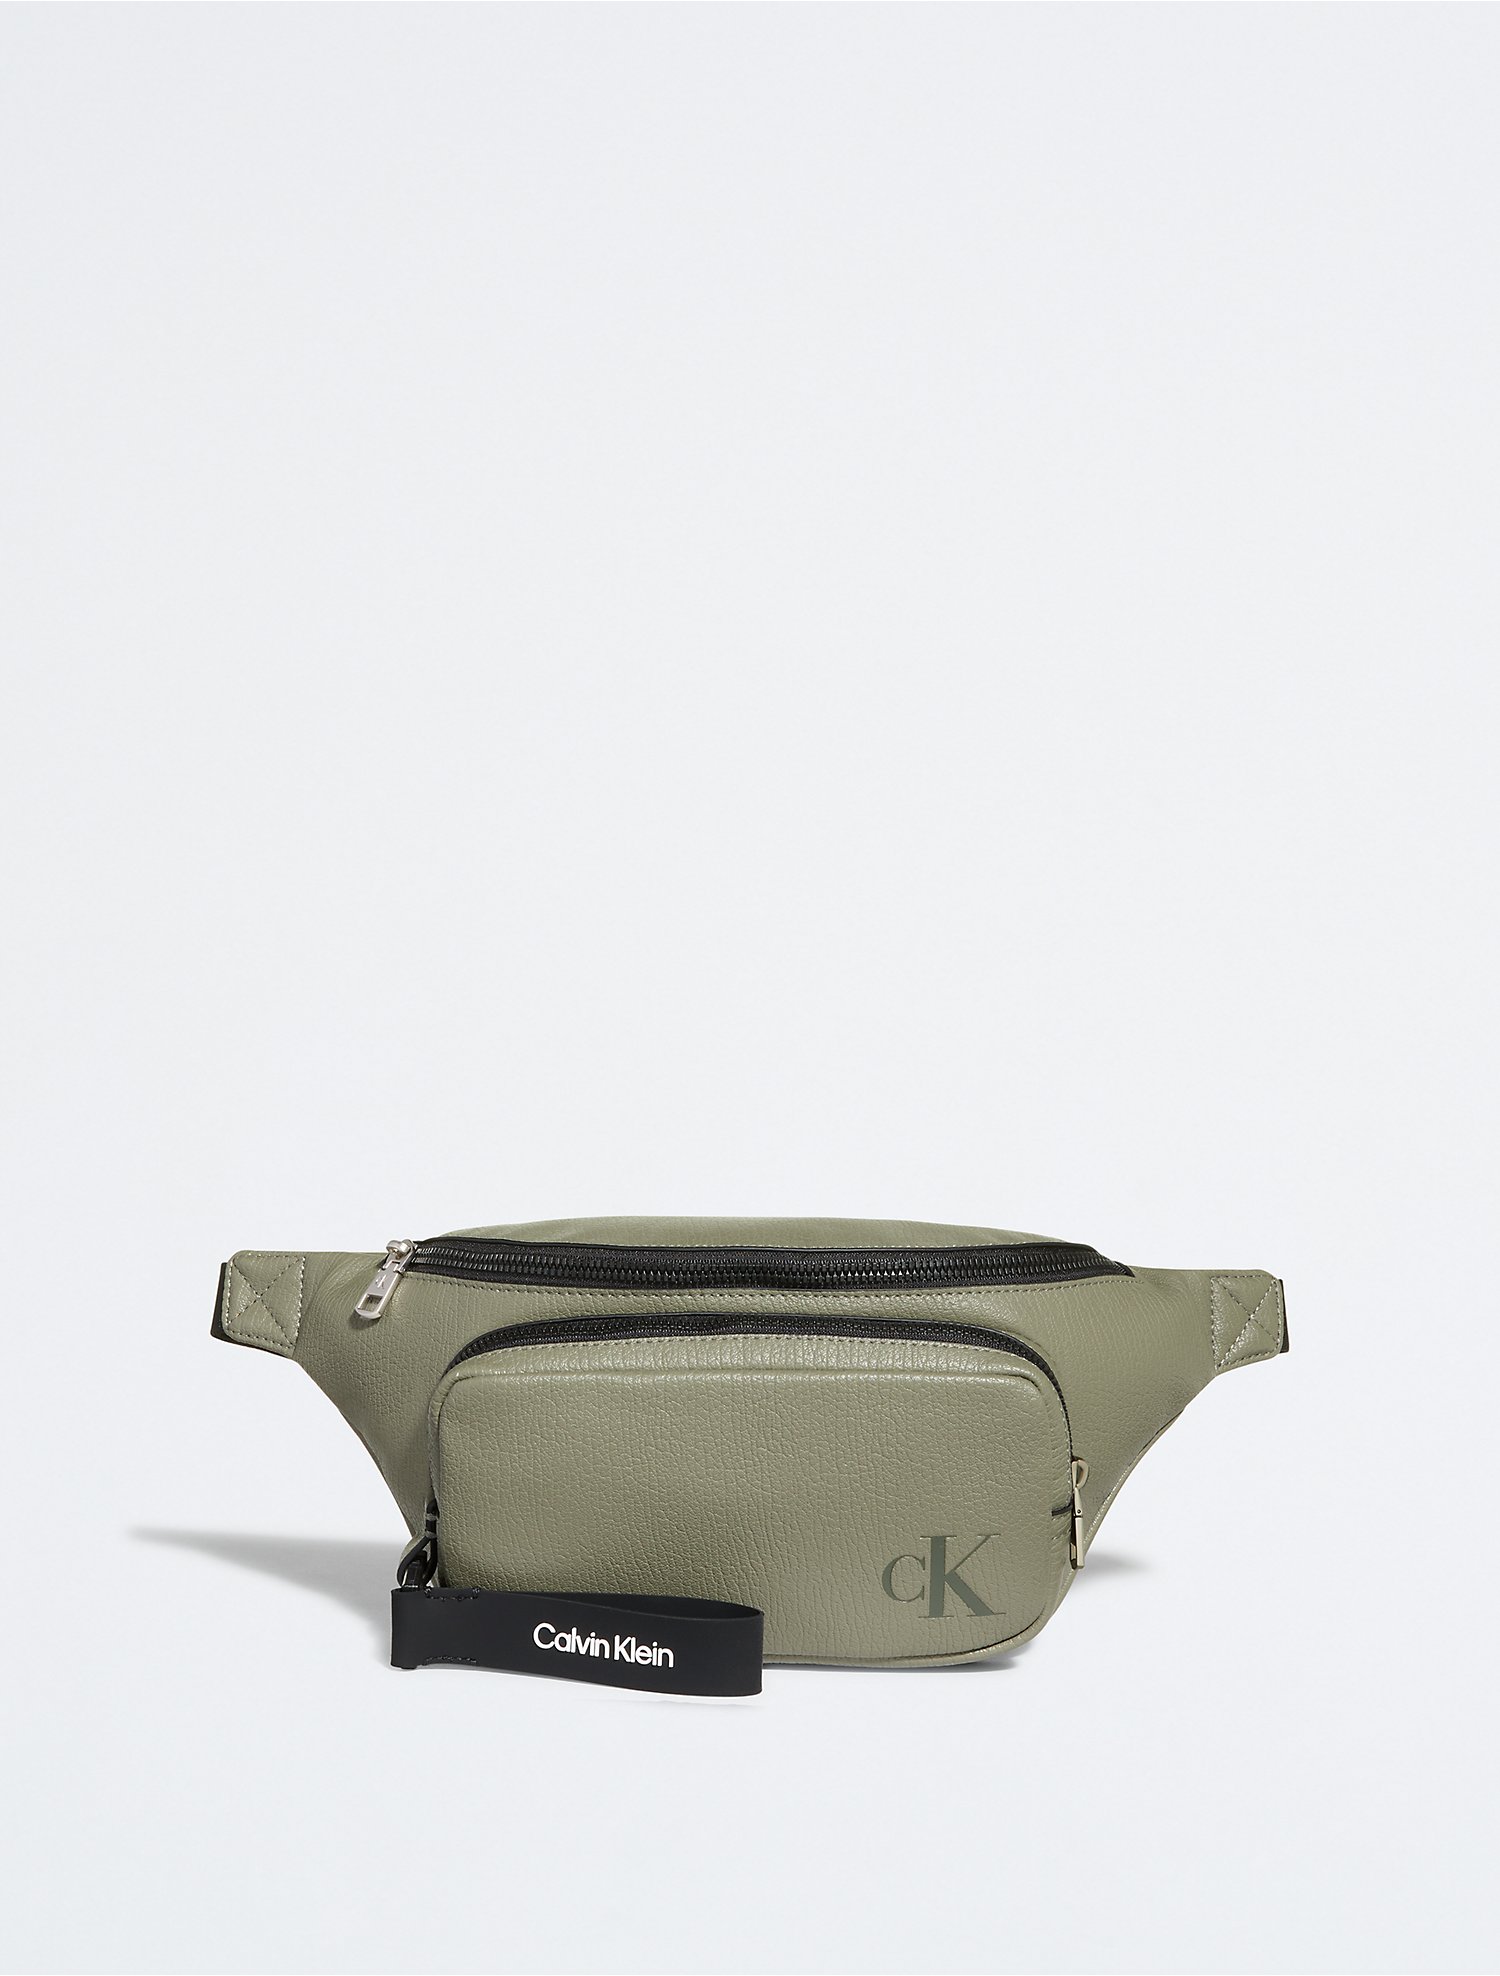 Tagged Belt Bag | Calvin Klein